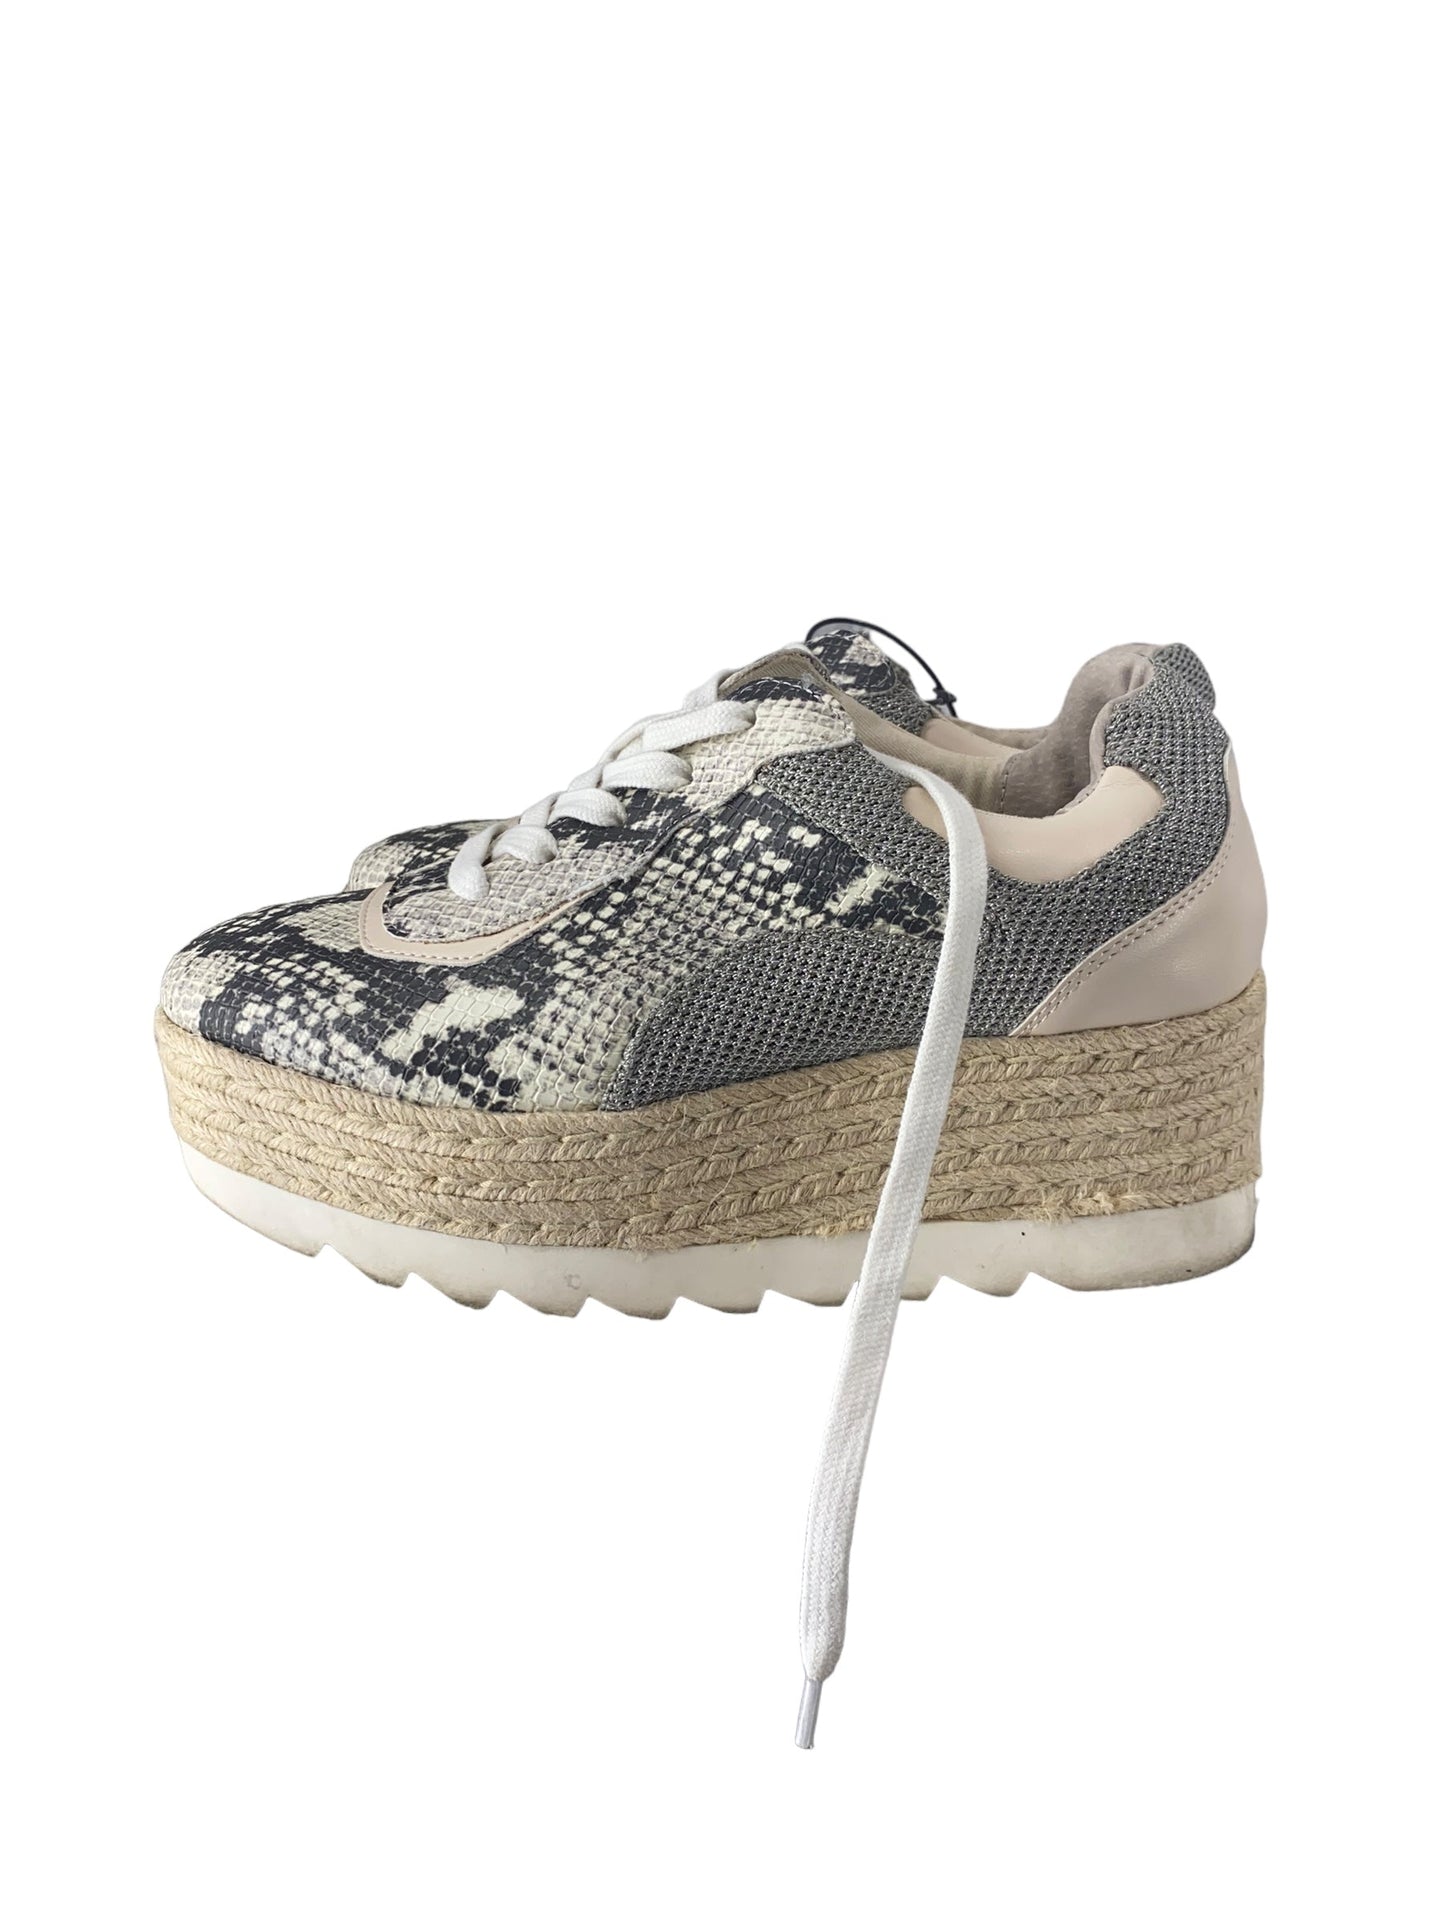 Snakeskin Print Shoes Sneakers Platform Steve Madden, Size 8.5